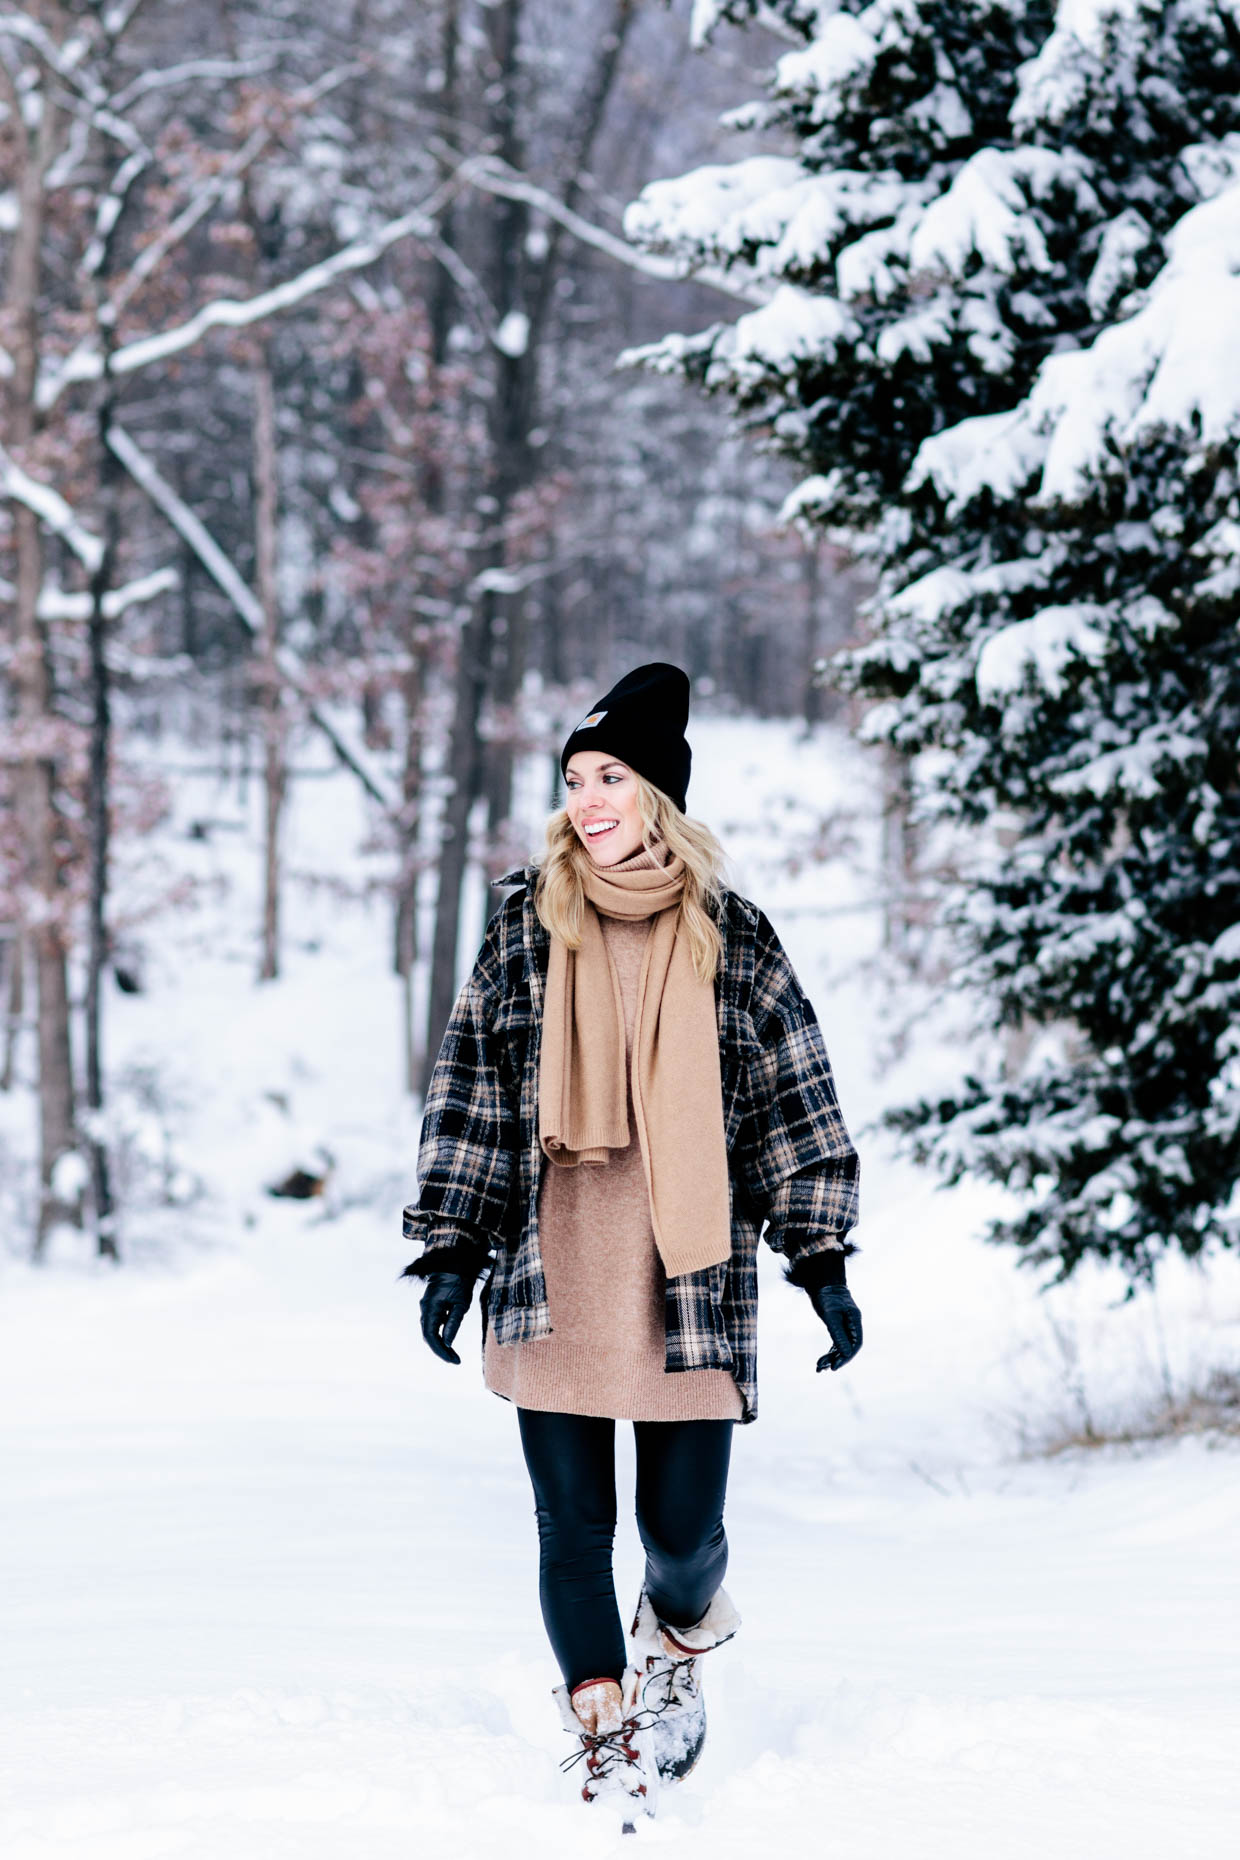 4 Ways to Look Stylish in the Snow - Meagan's Moda